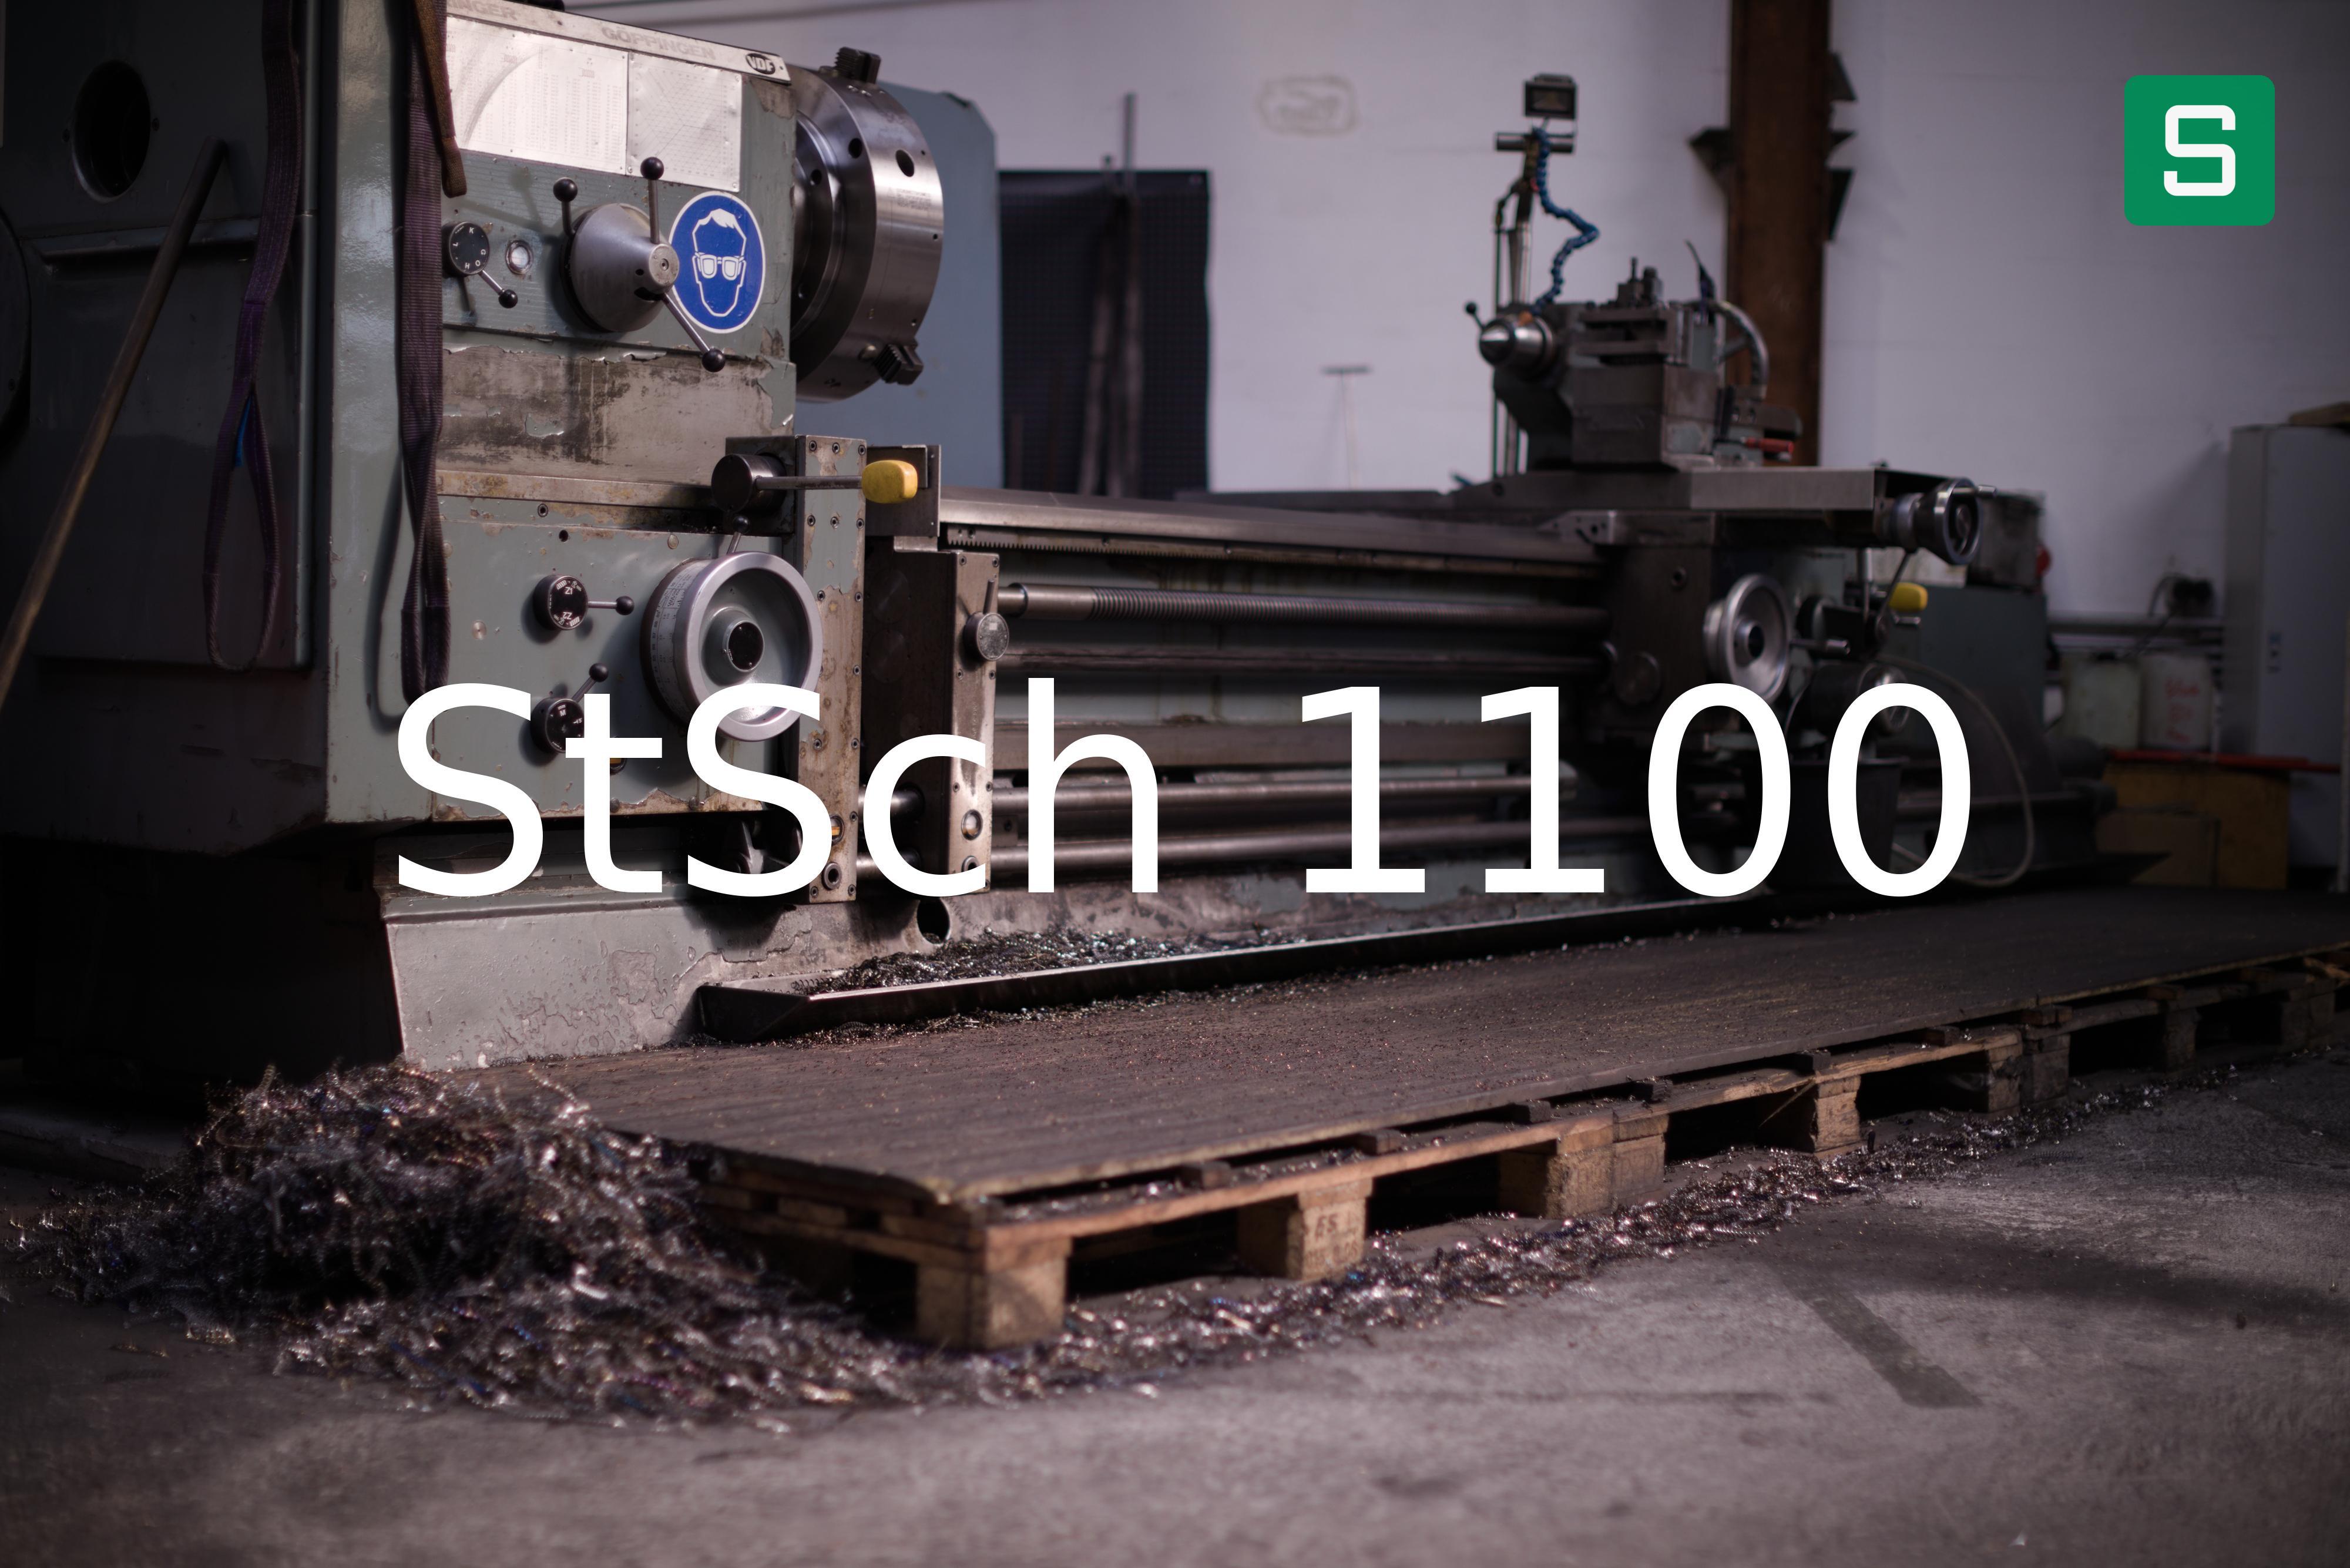 Steel Material: StSch 1100